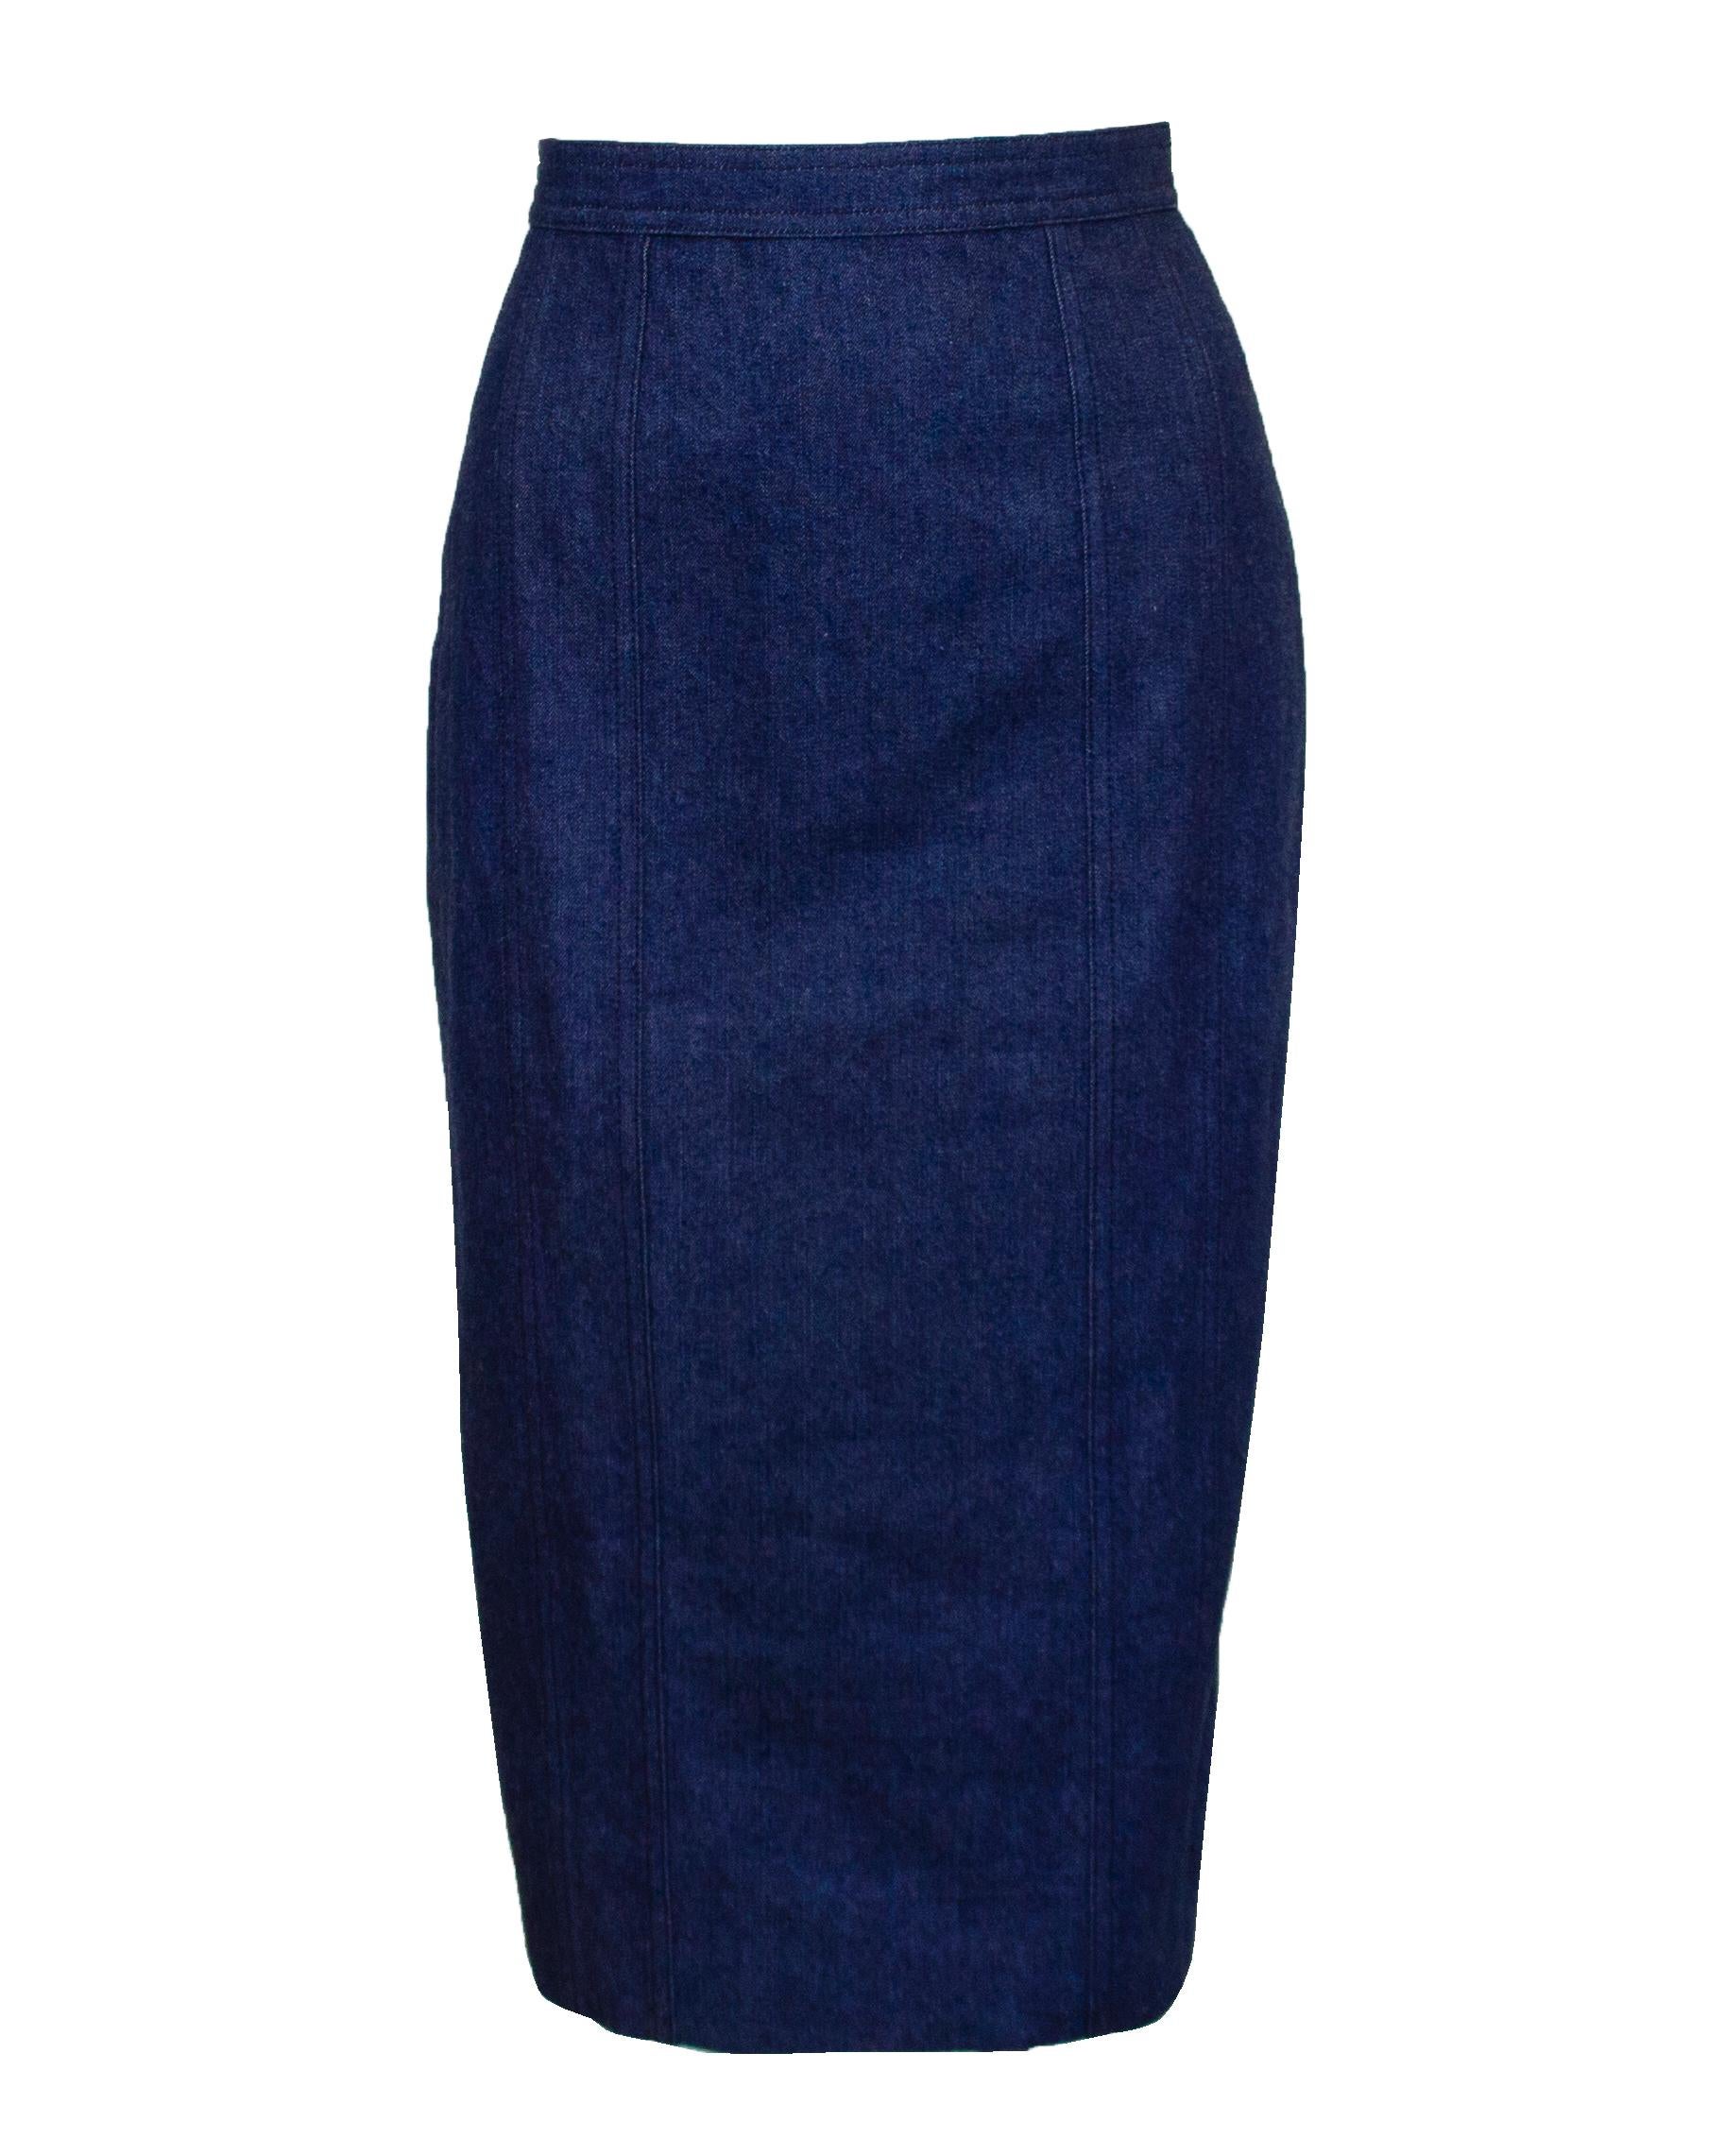 1990s Chanel Blue and White Denim Strapless Top & Skirt Ensemble For Sale 1